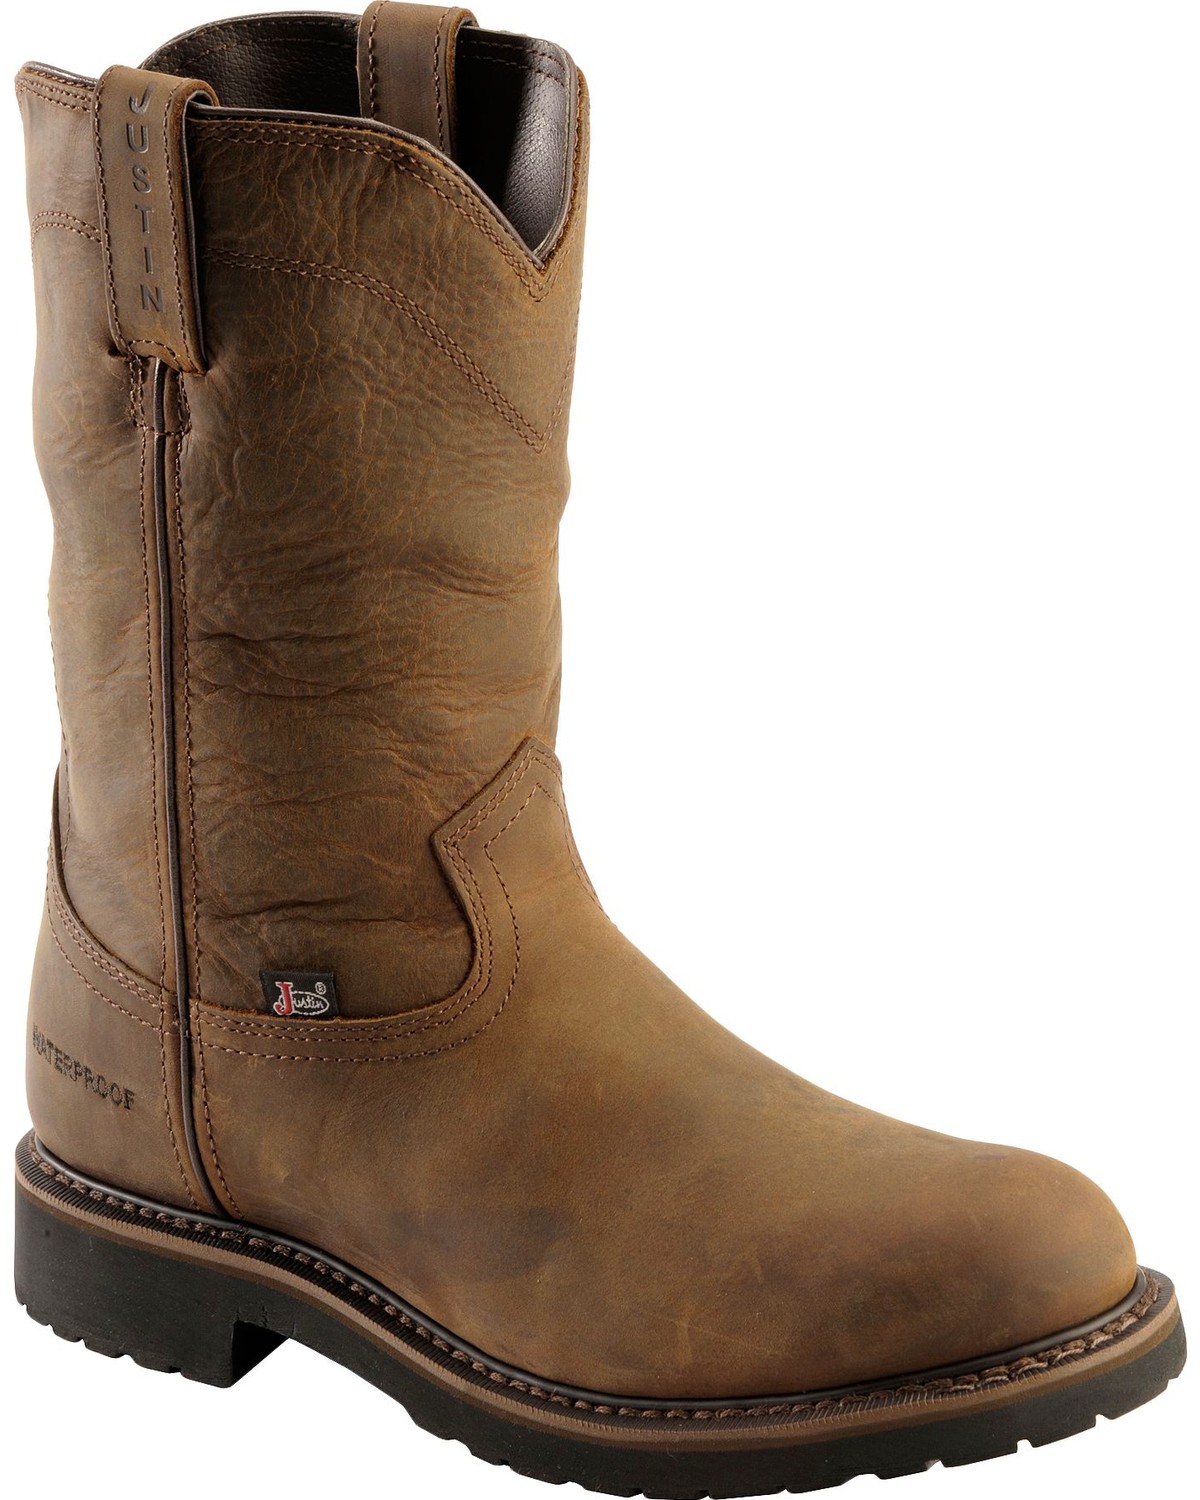 boots waterproof